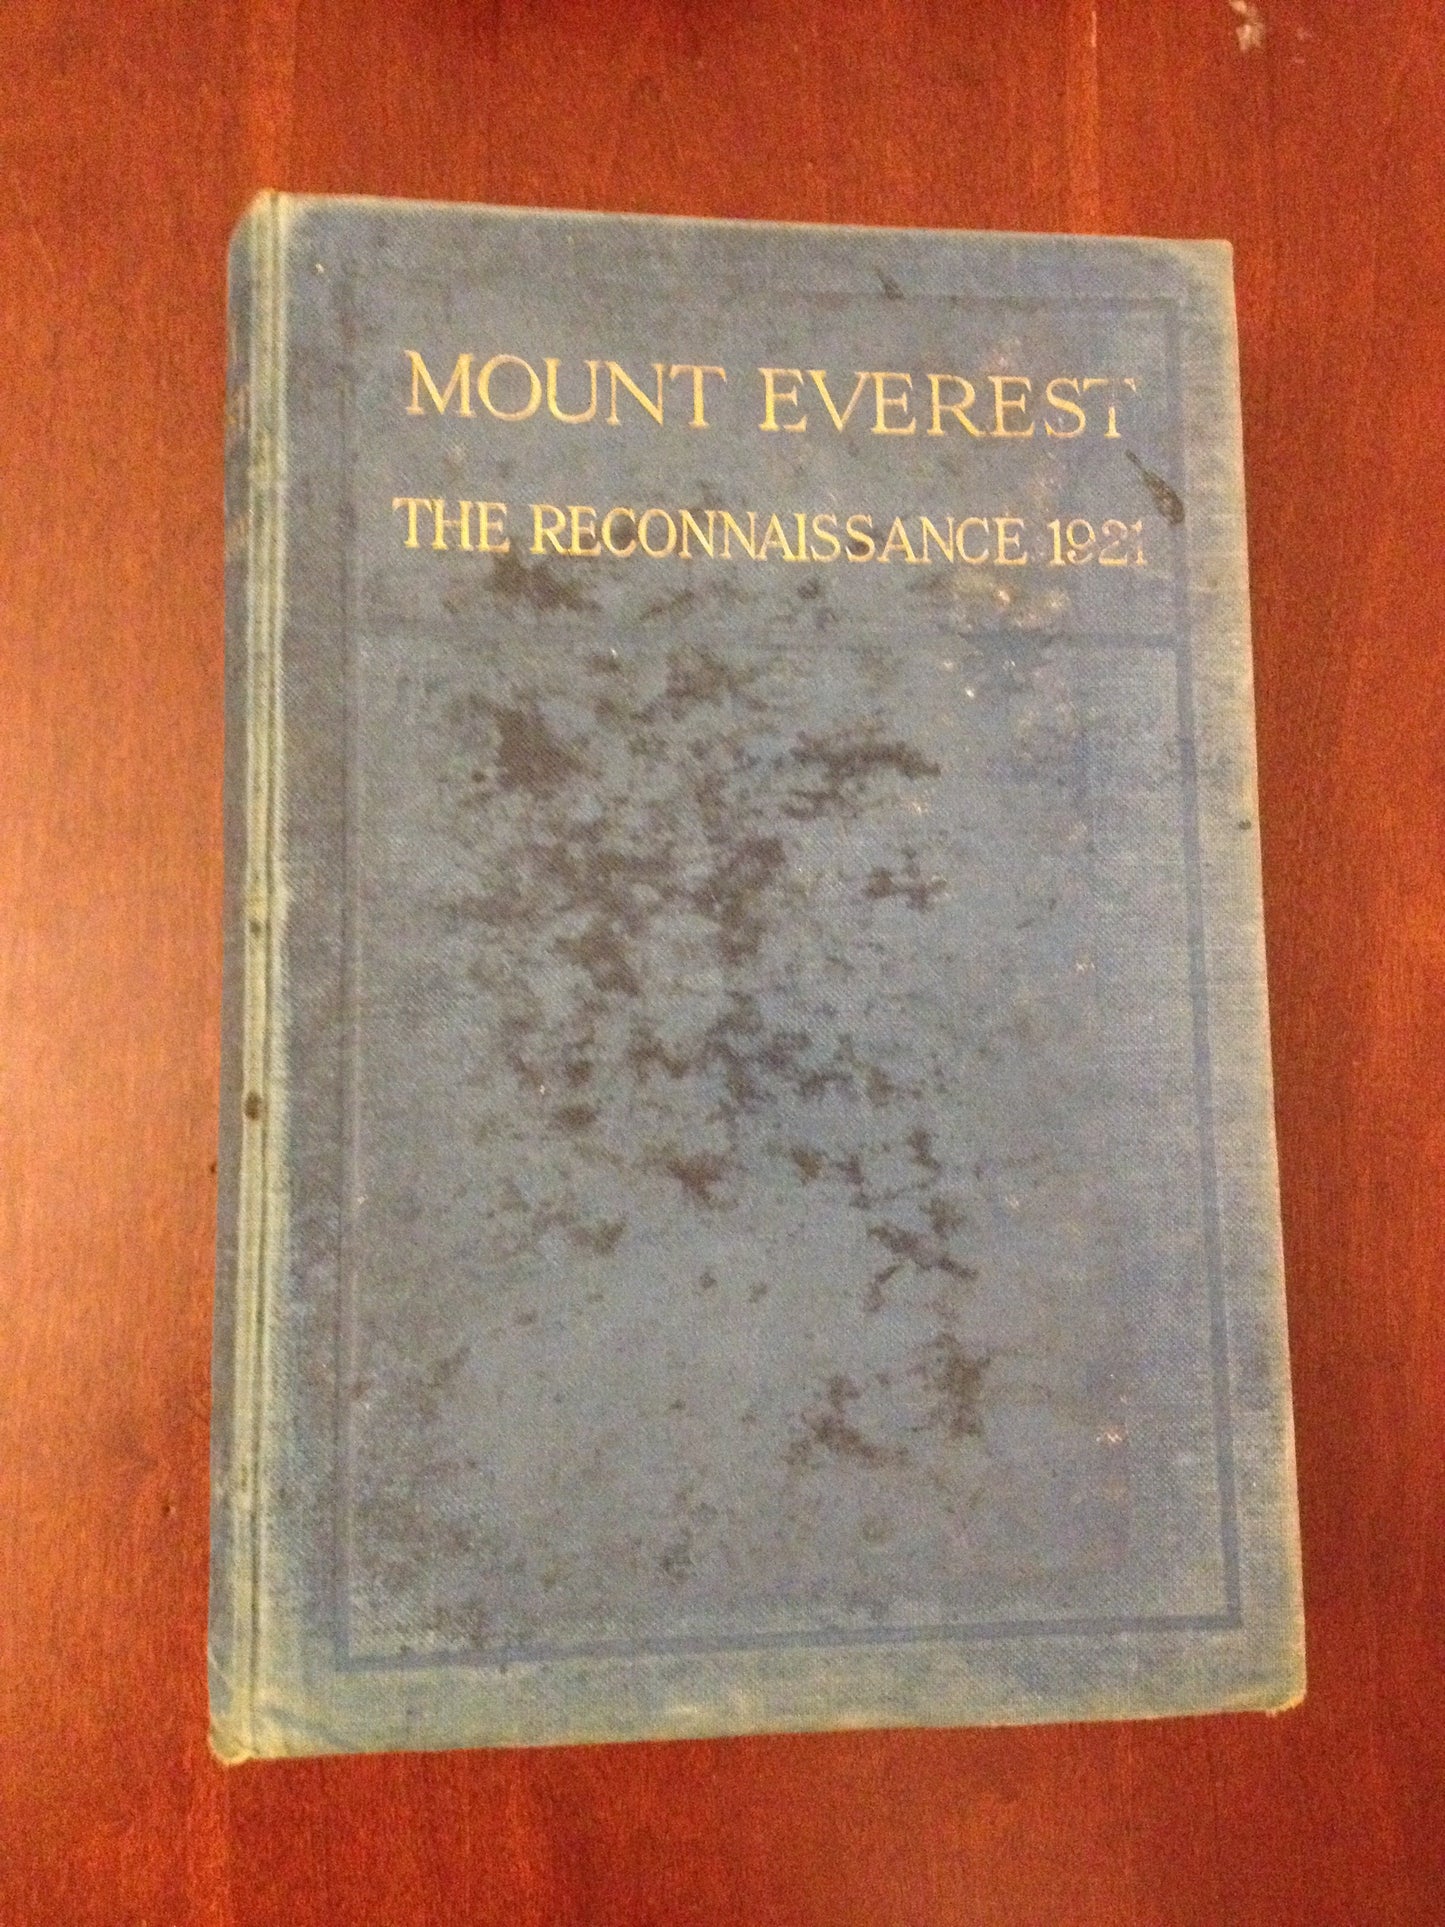 MOUNT EVEREST - A RECONNAISSANCE 1921